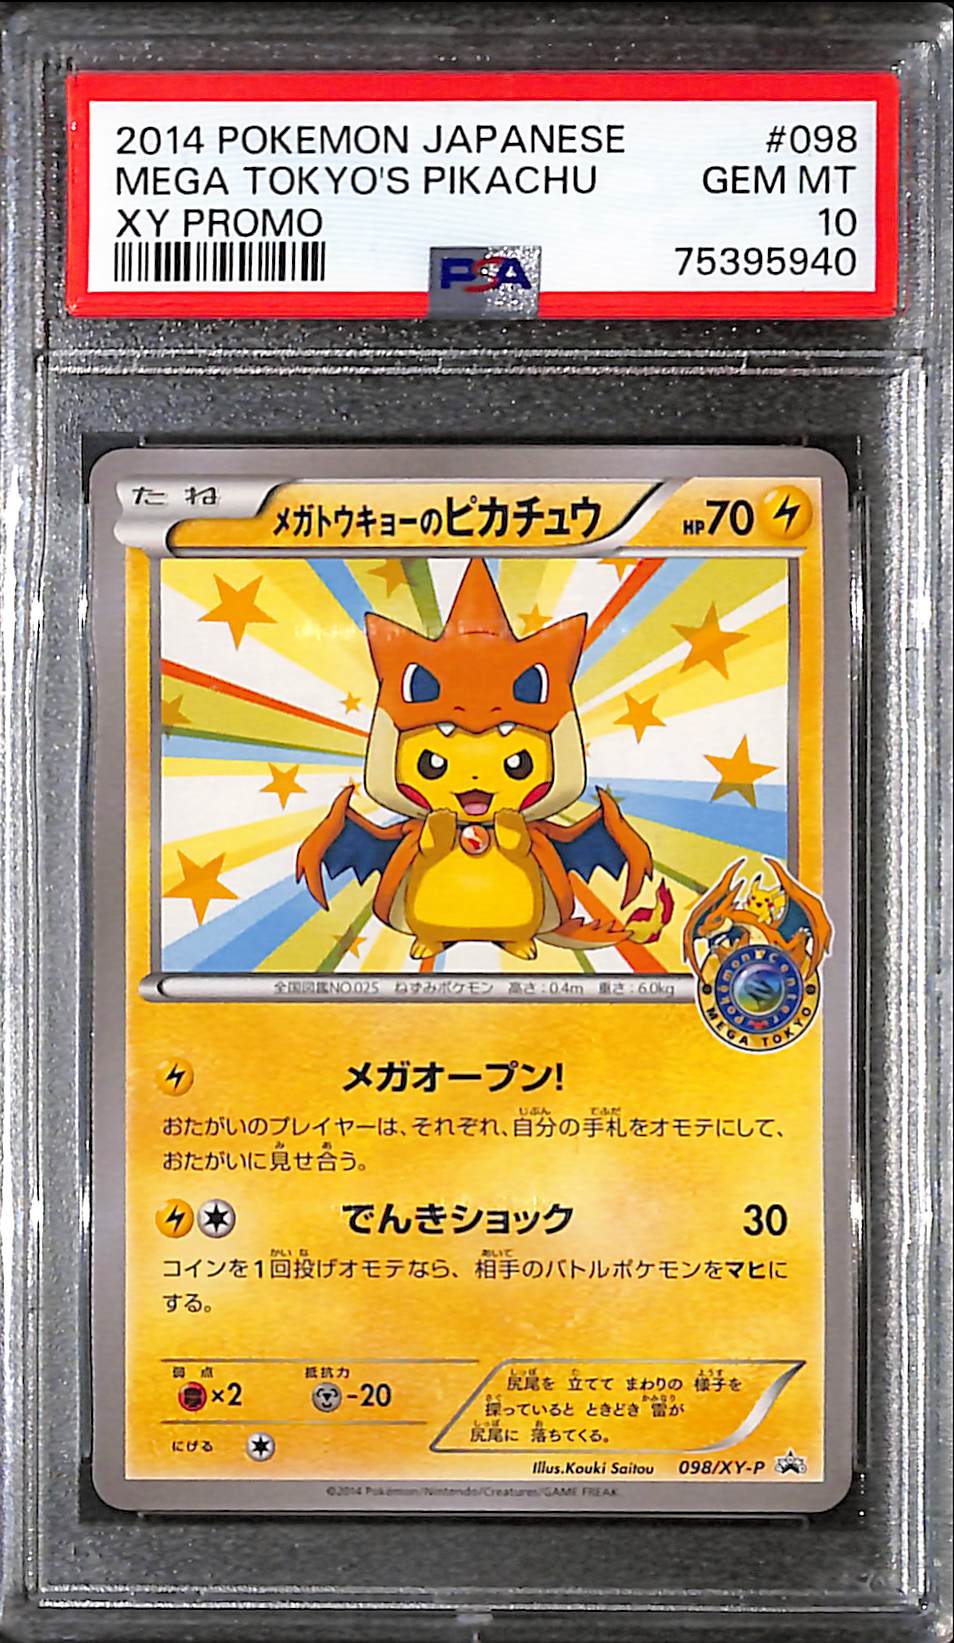 PSA10 - 2014 Pokemon Japanese - Mega Tokyo's Pikachu 098/XY-P - XY Promo - TCGroupAU